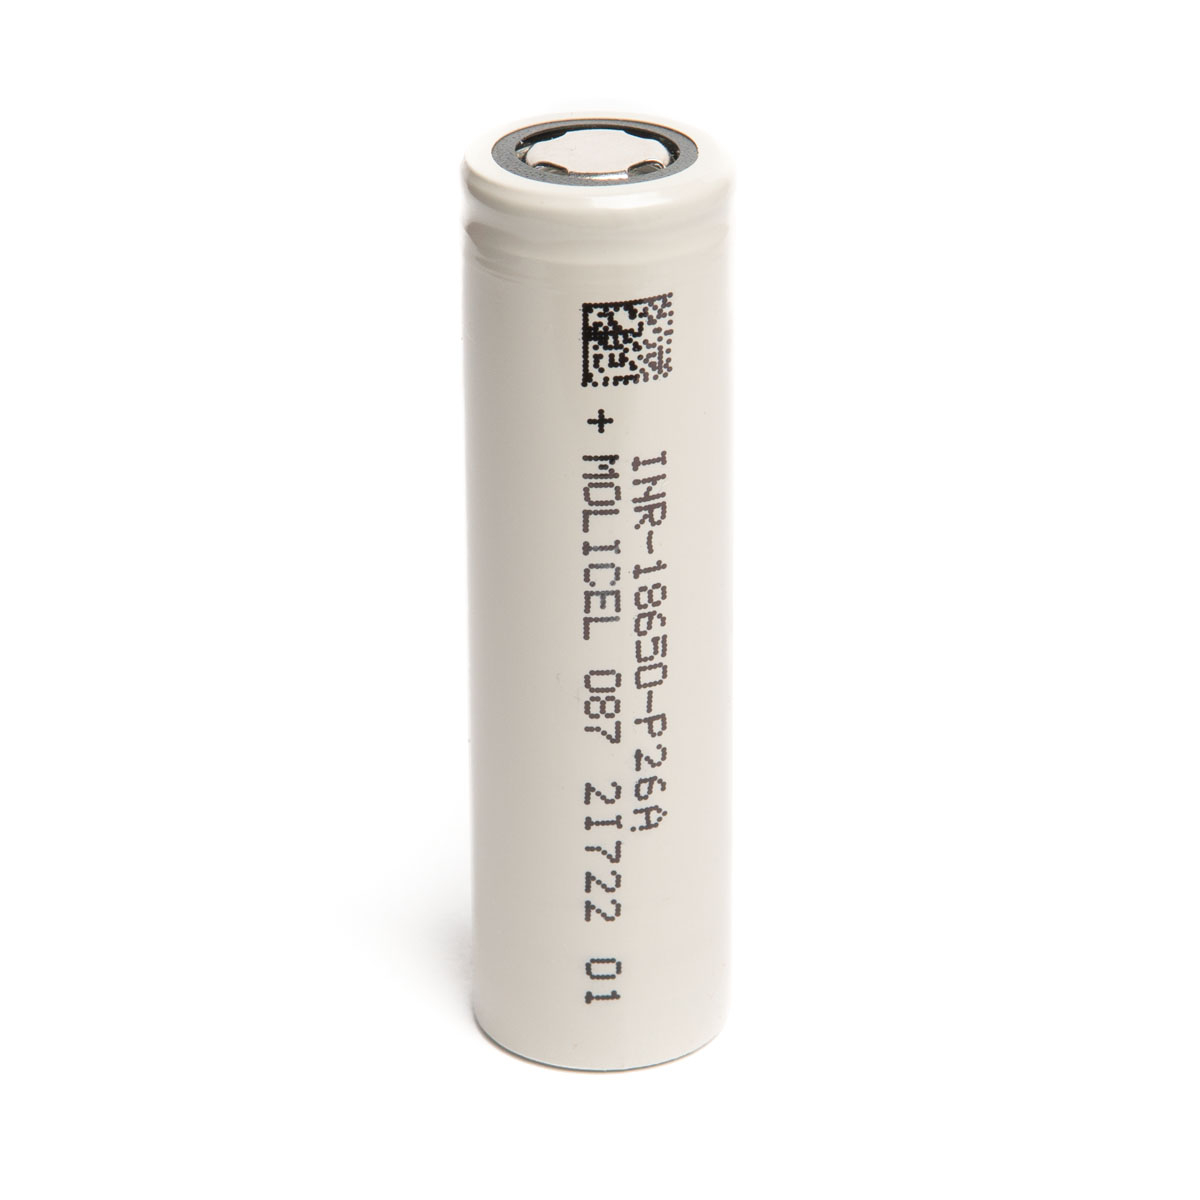 MOLICEL P26A batteria ricaricabile 18650 2600mah 35A